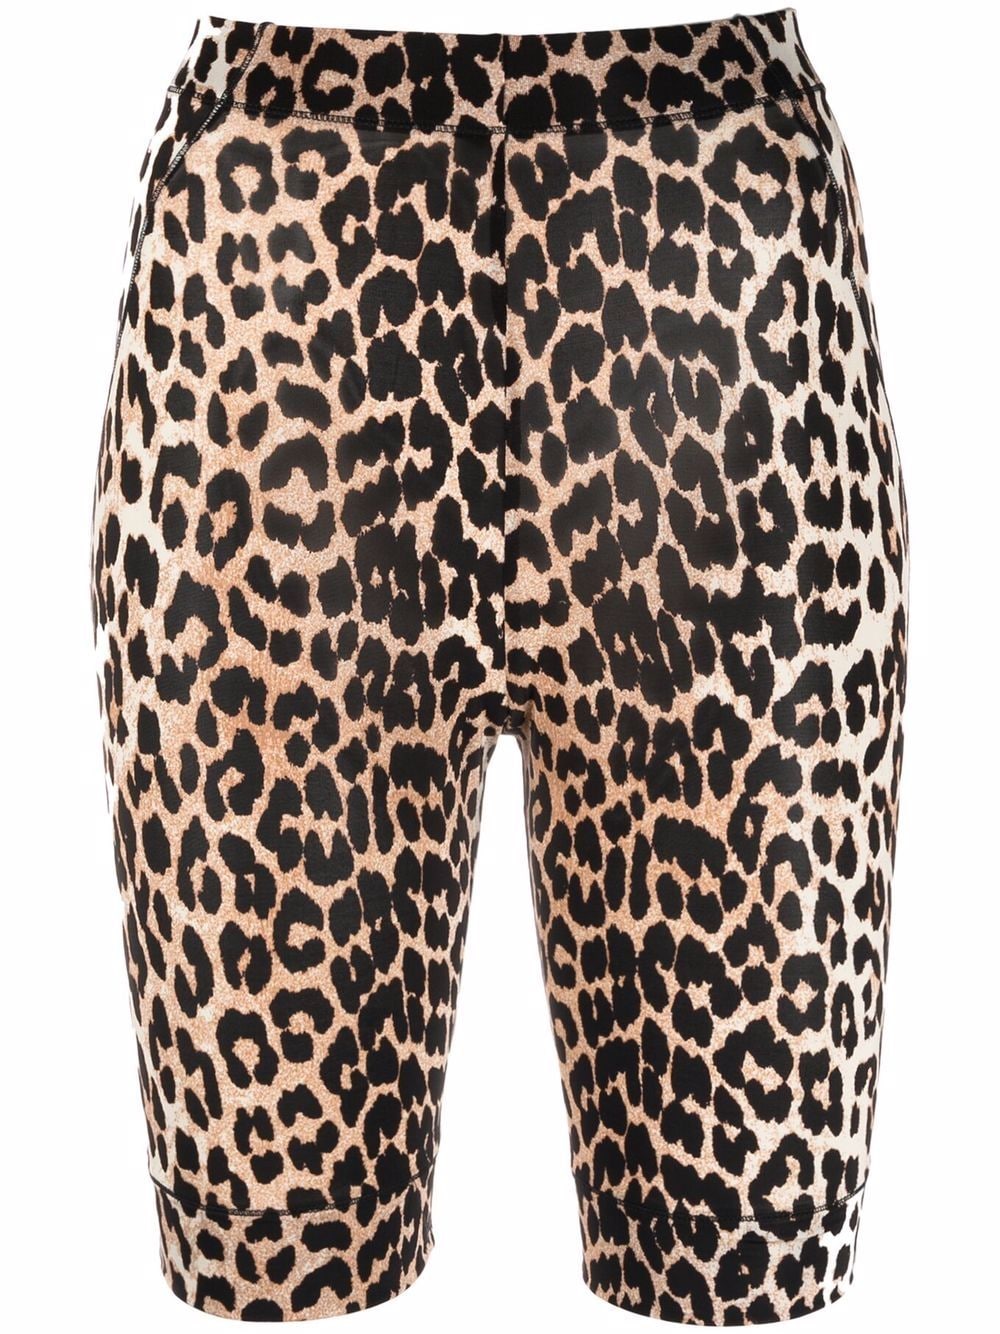 leopard-print shorts